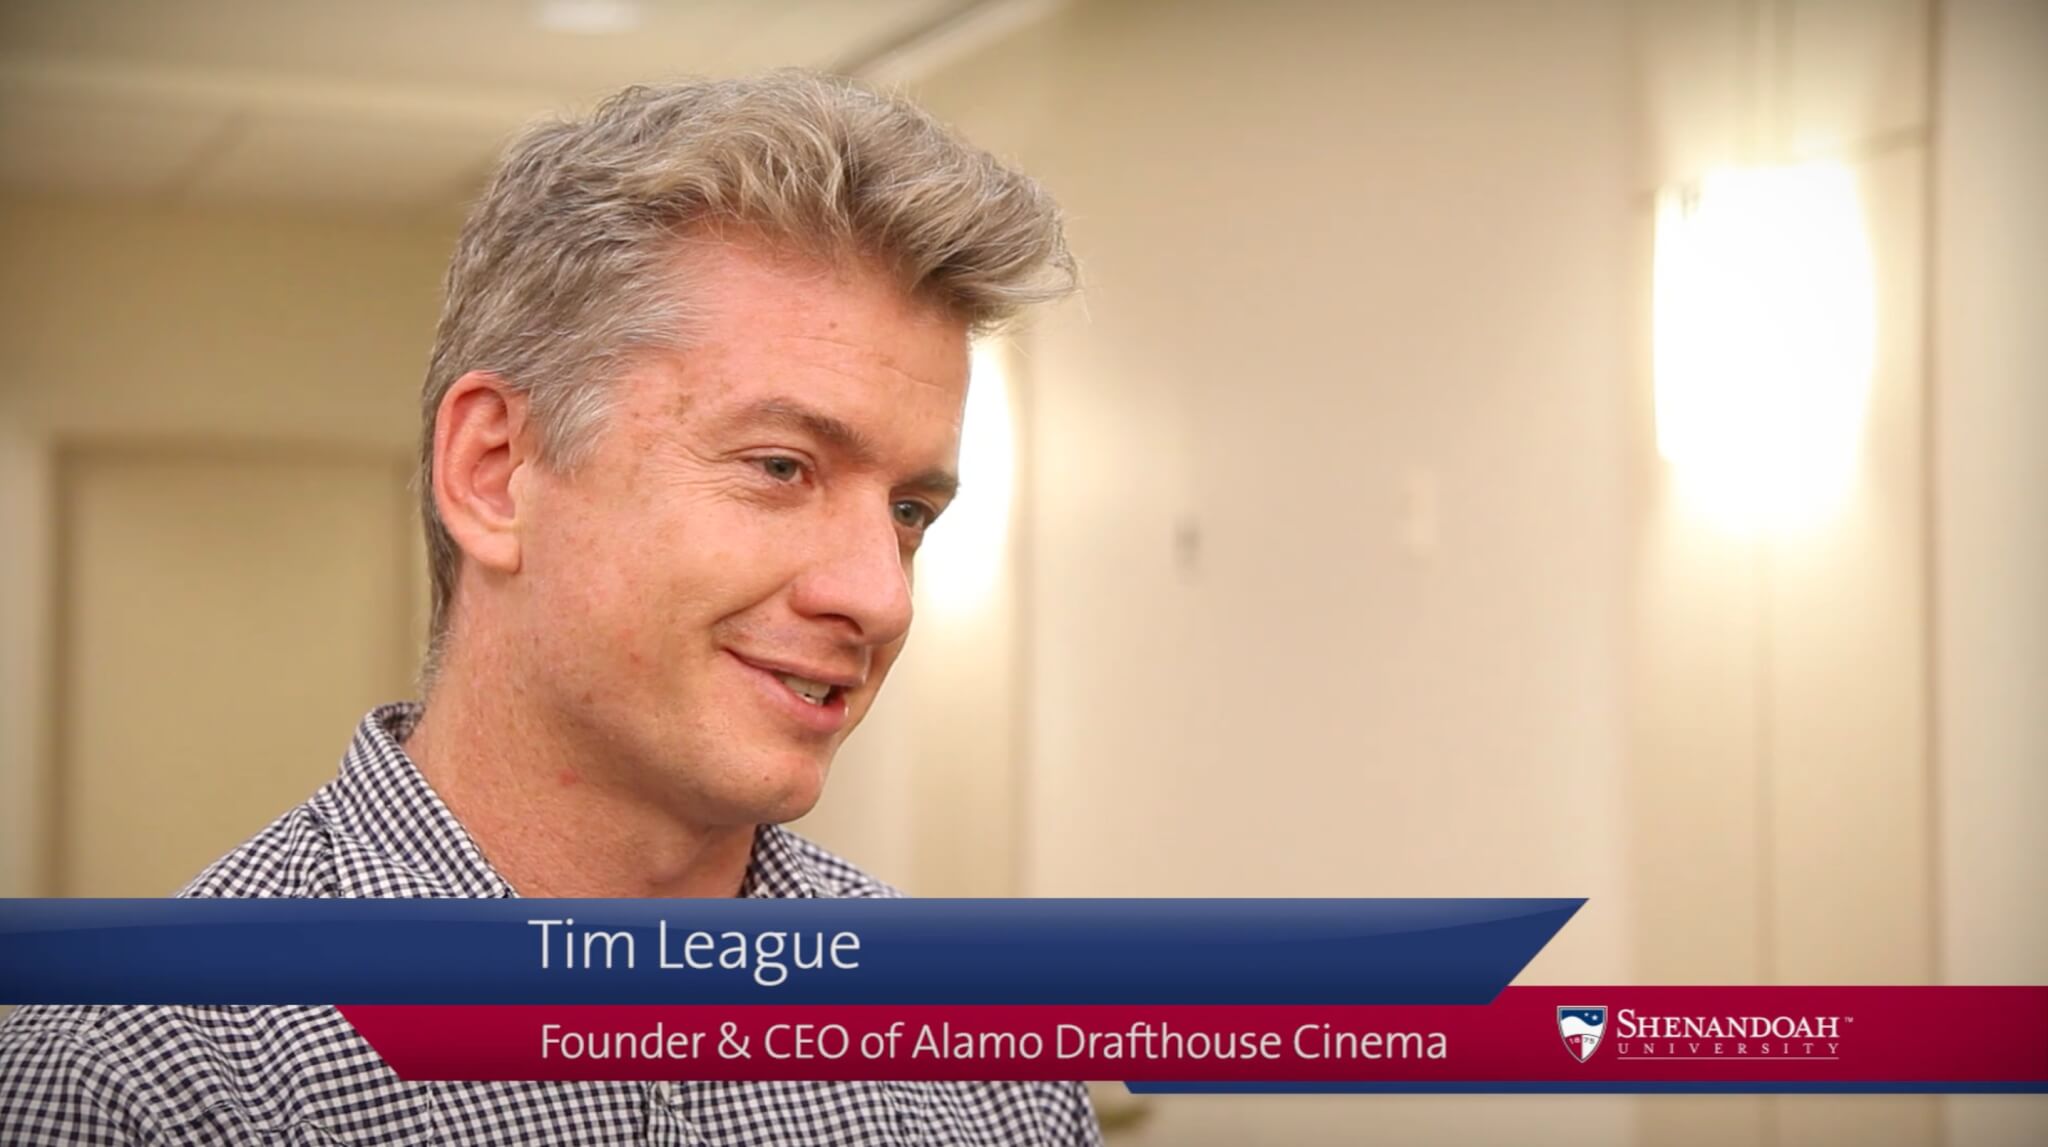 Alamo Drafthouse Cinema Founder Accepts Entrepreneurship Award